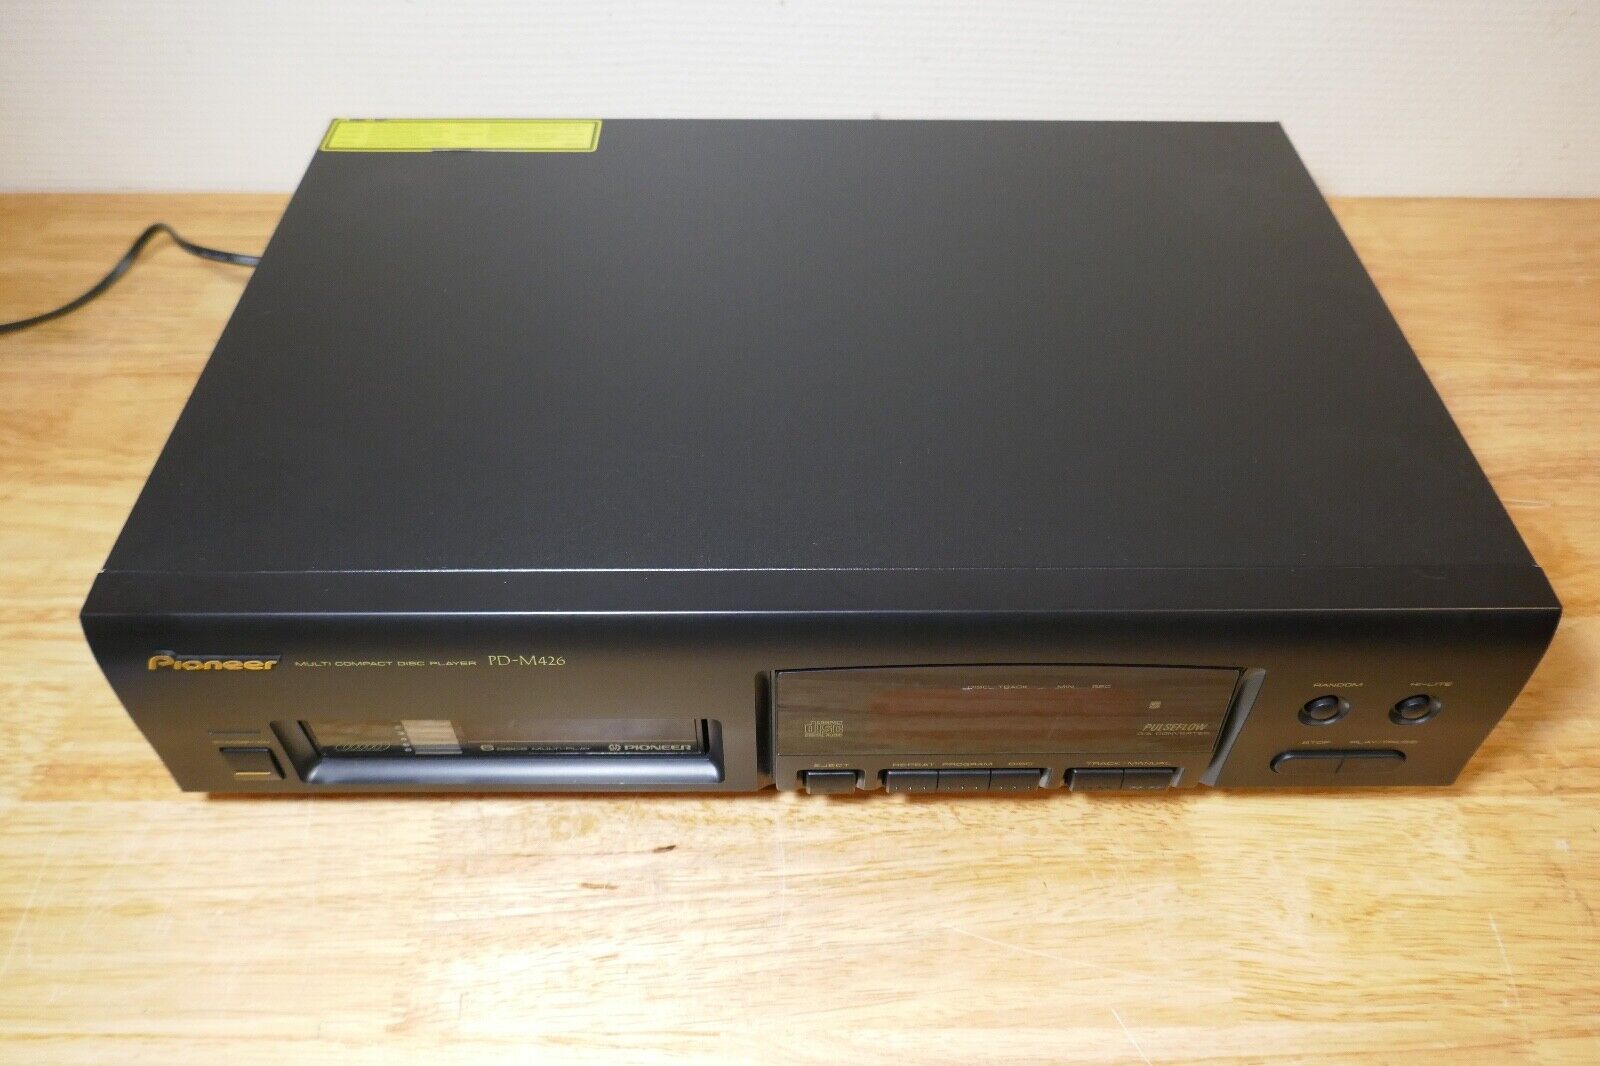 lecteur compact disc player pioneer PD-M426 vintage occasion